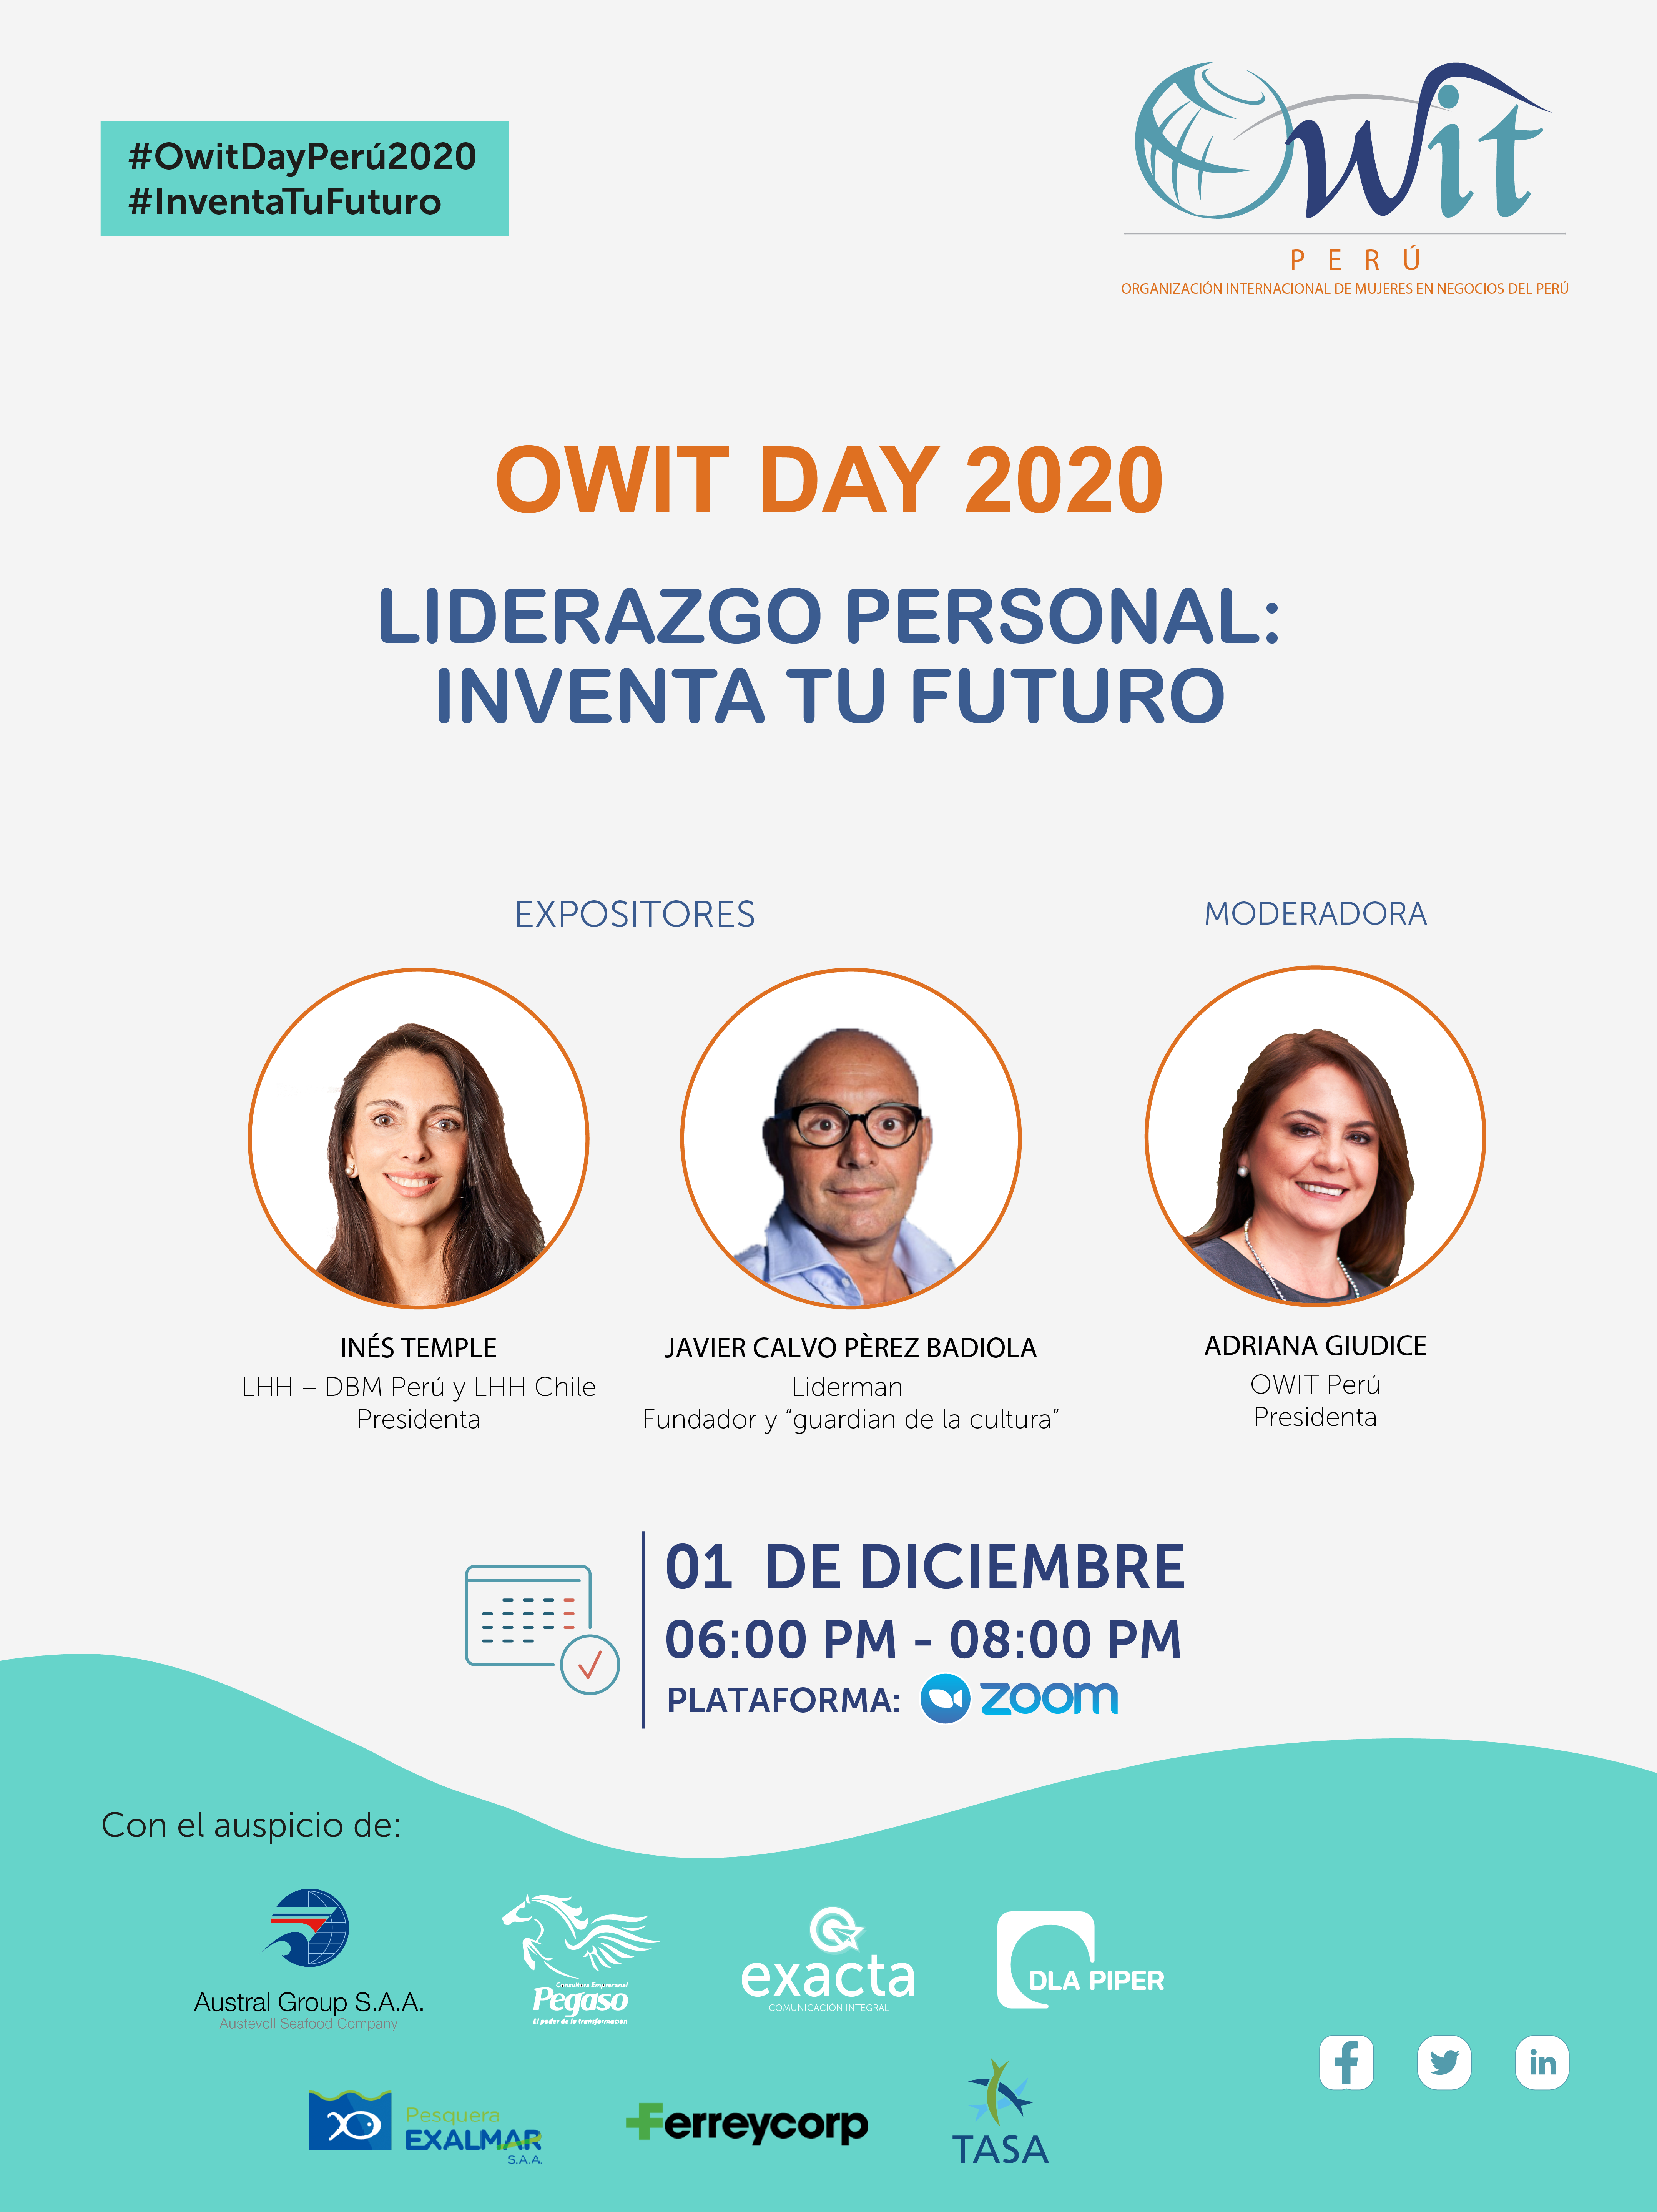 OWIT Day 2020: Liderazgo personal, inventa tu futuro